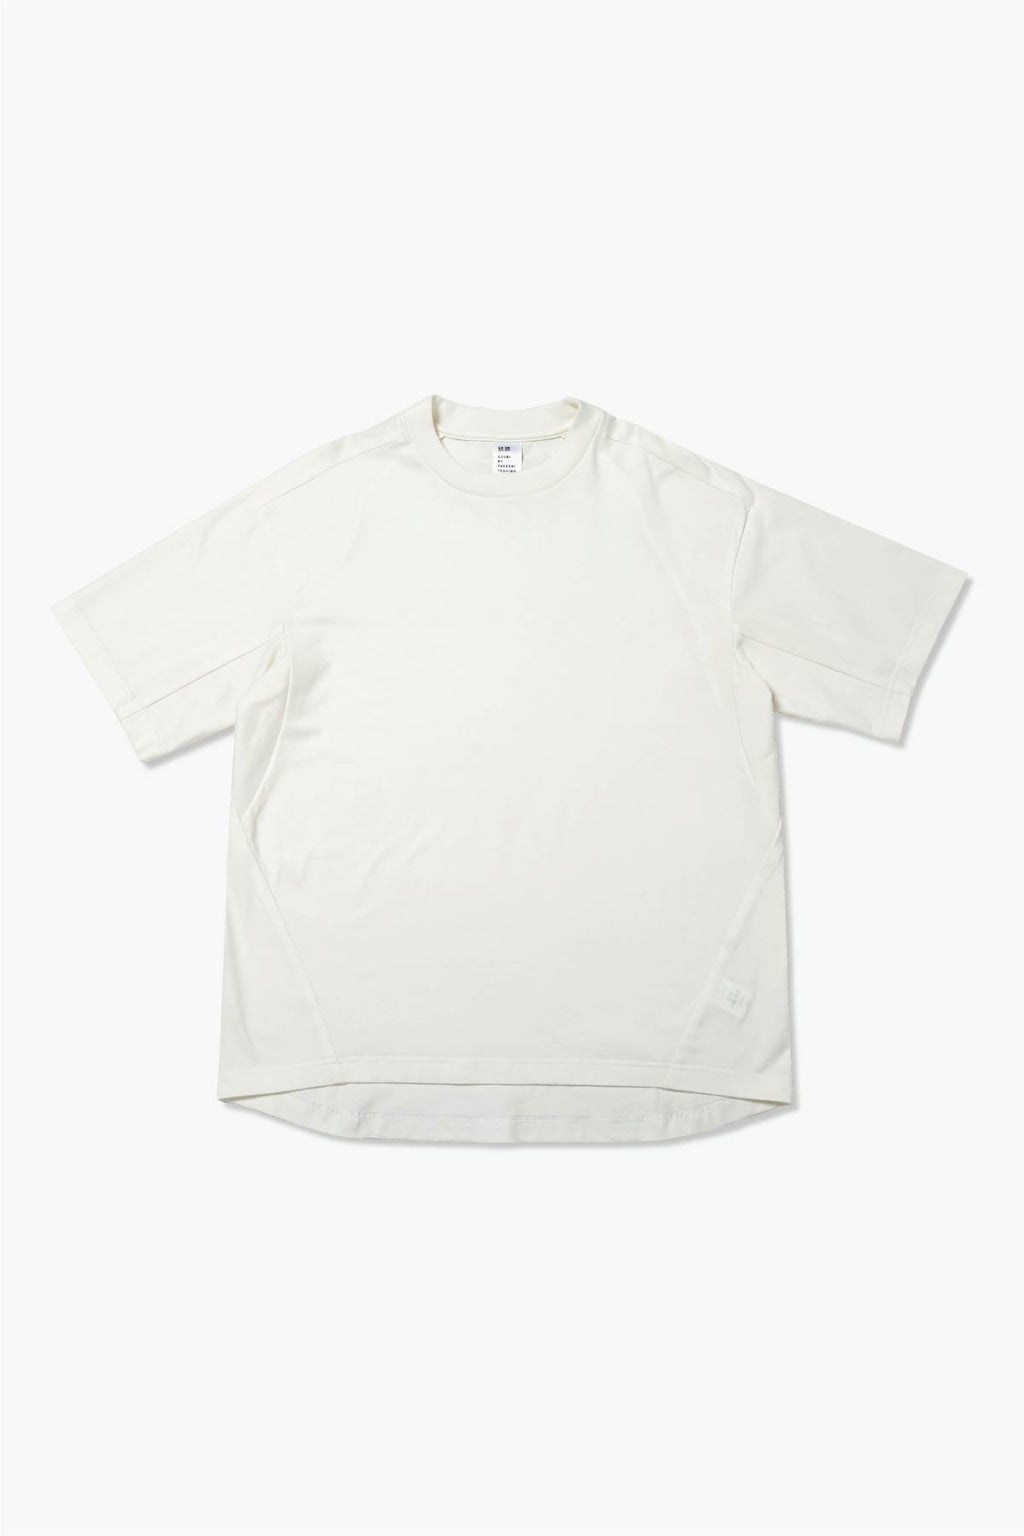 Stereo type T-Shirts 【Plain】